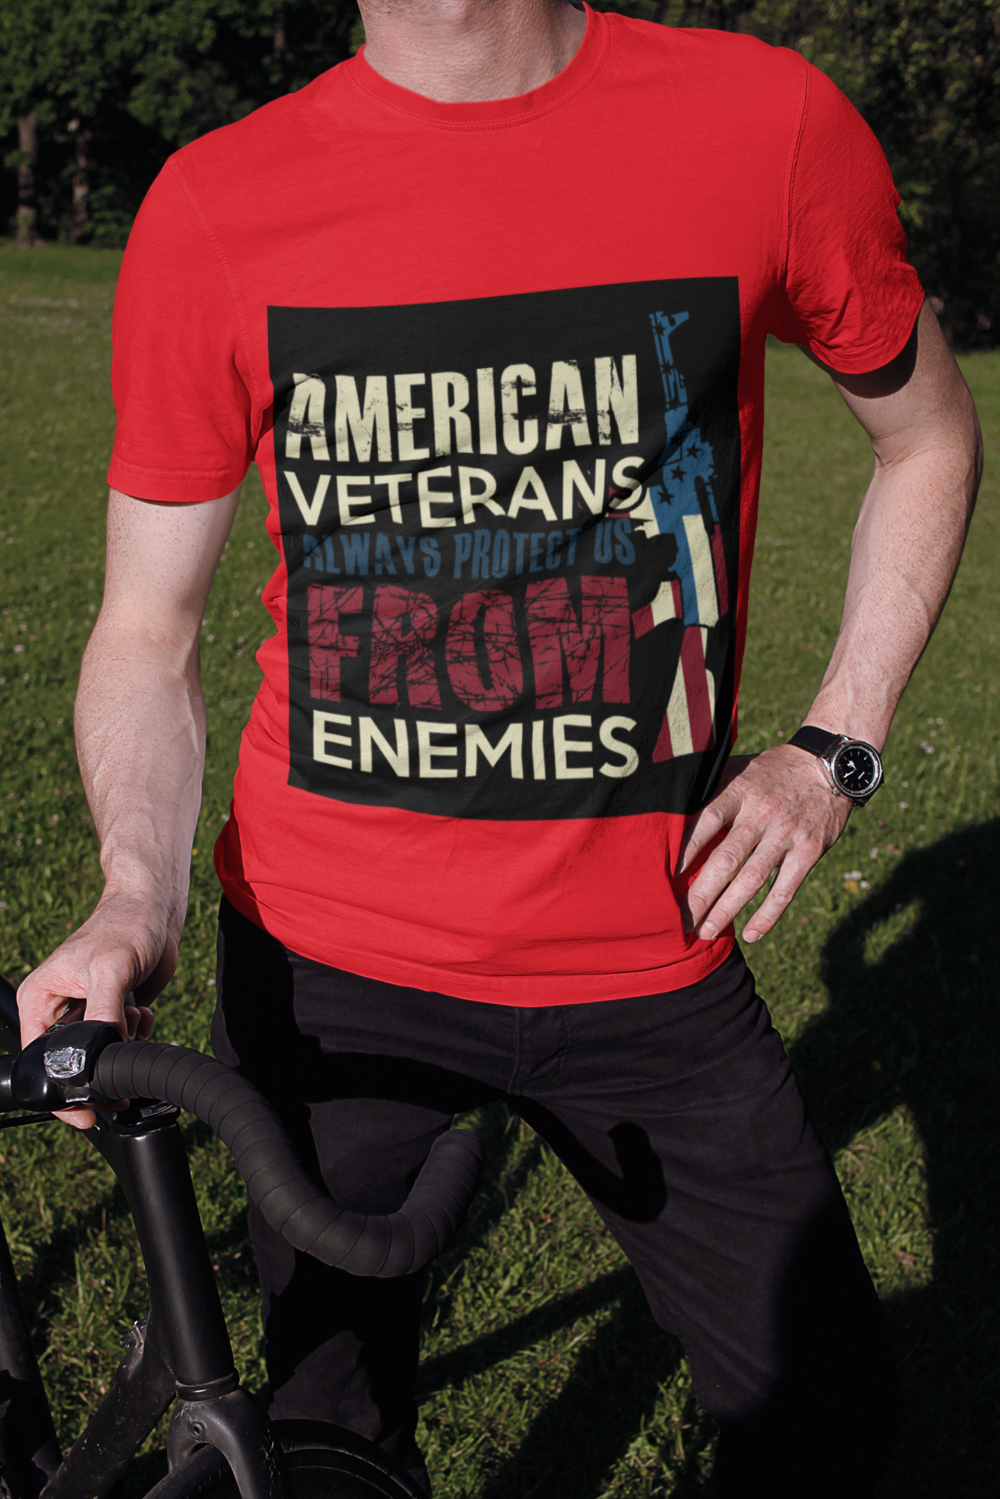 t shirt mockup of a man posing with his bicycle 2017 el1